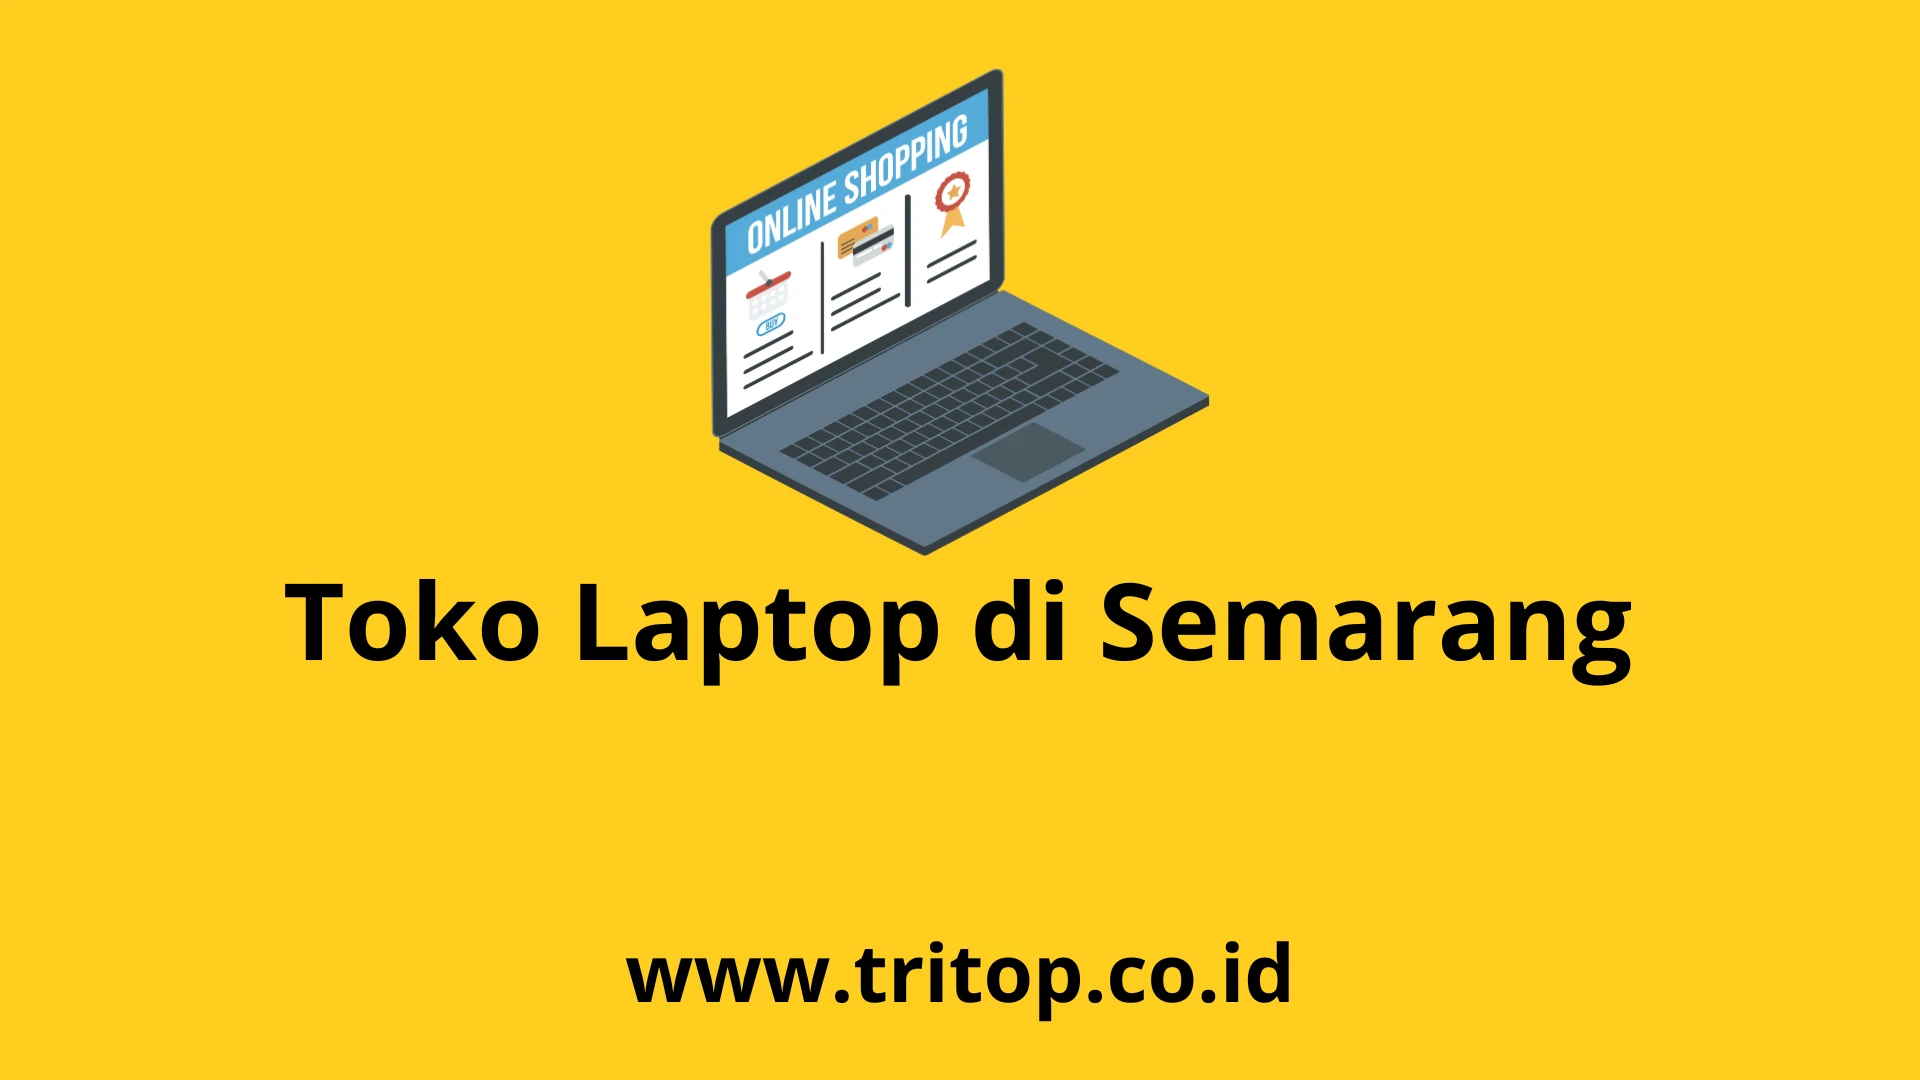 Toko Laptop Semarang Tritop.co.id